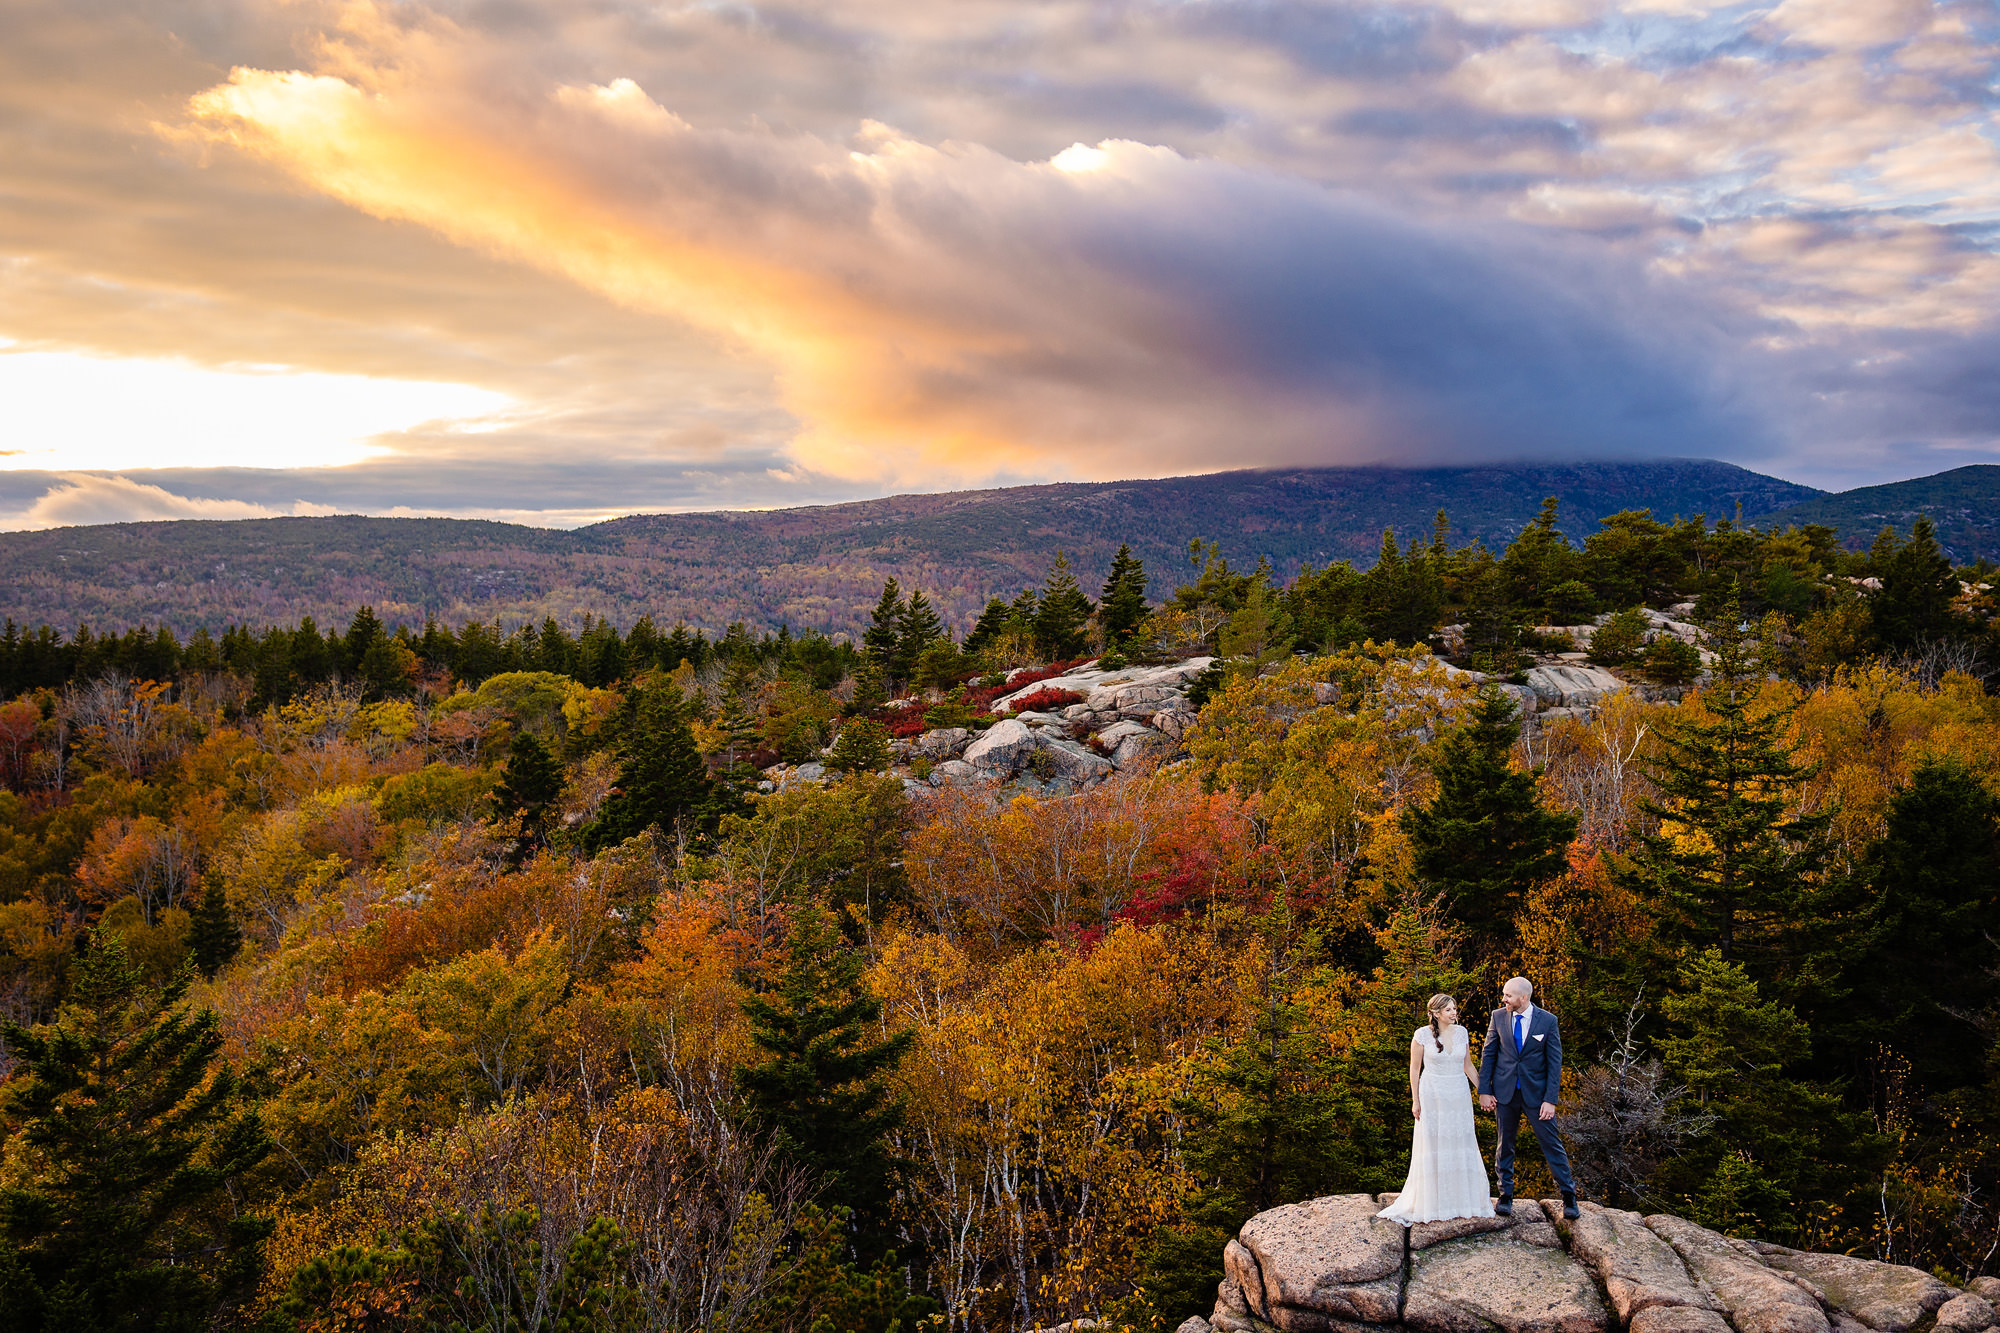 A striking sunset wedding portrait in Acadia taken in Autumn.